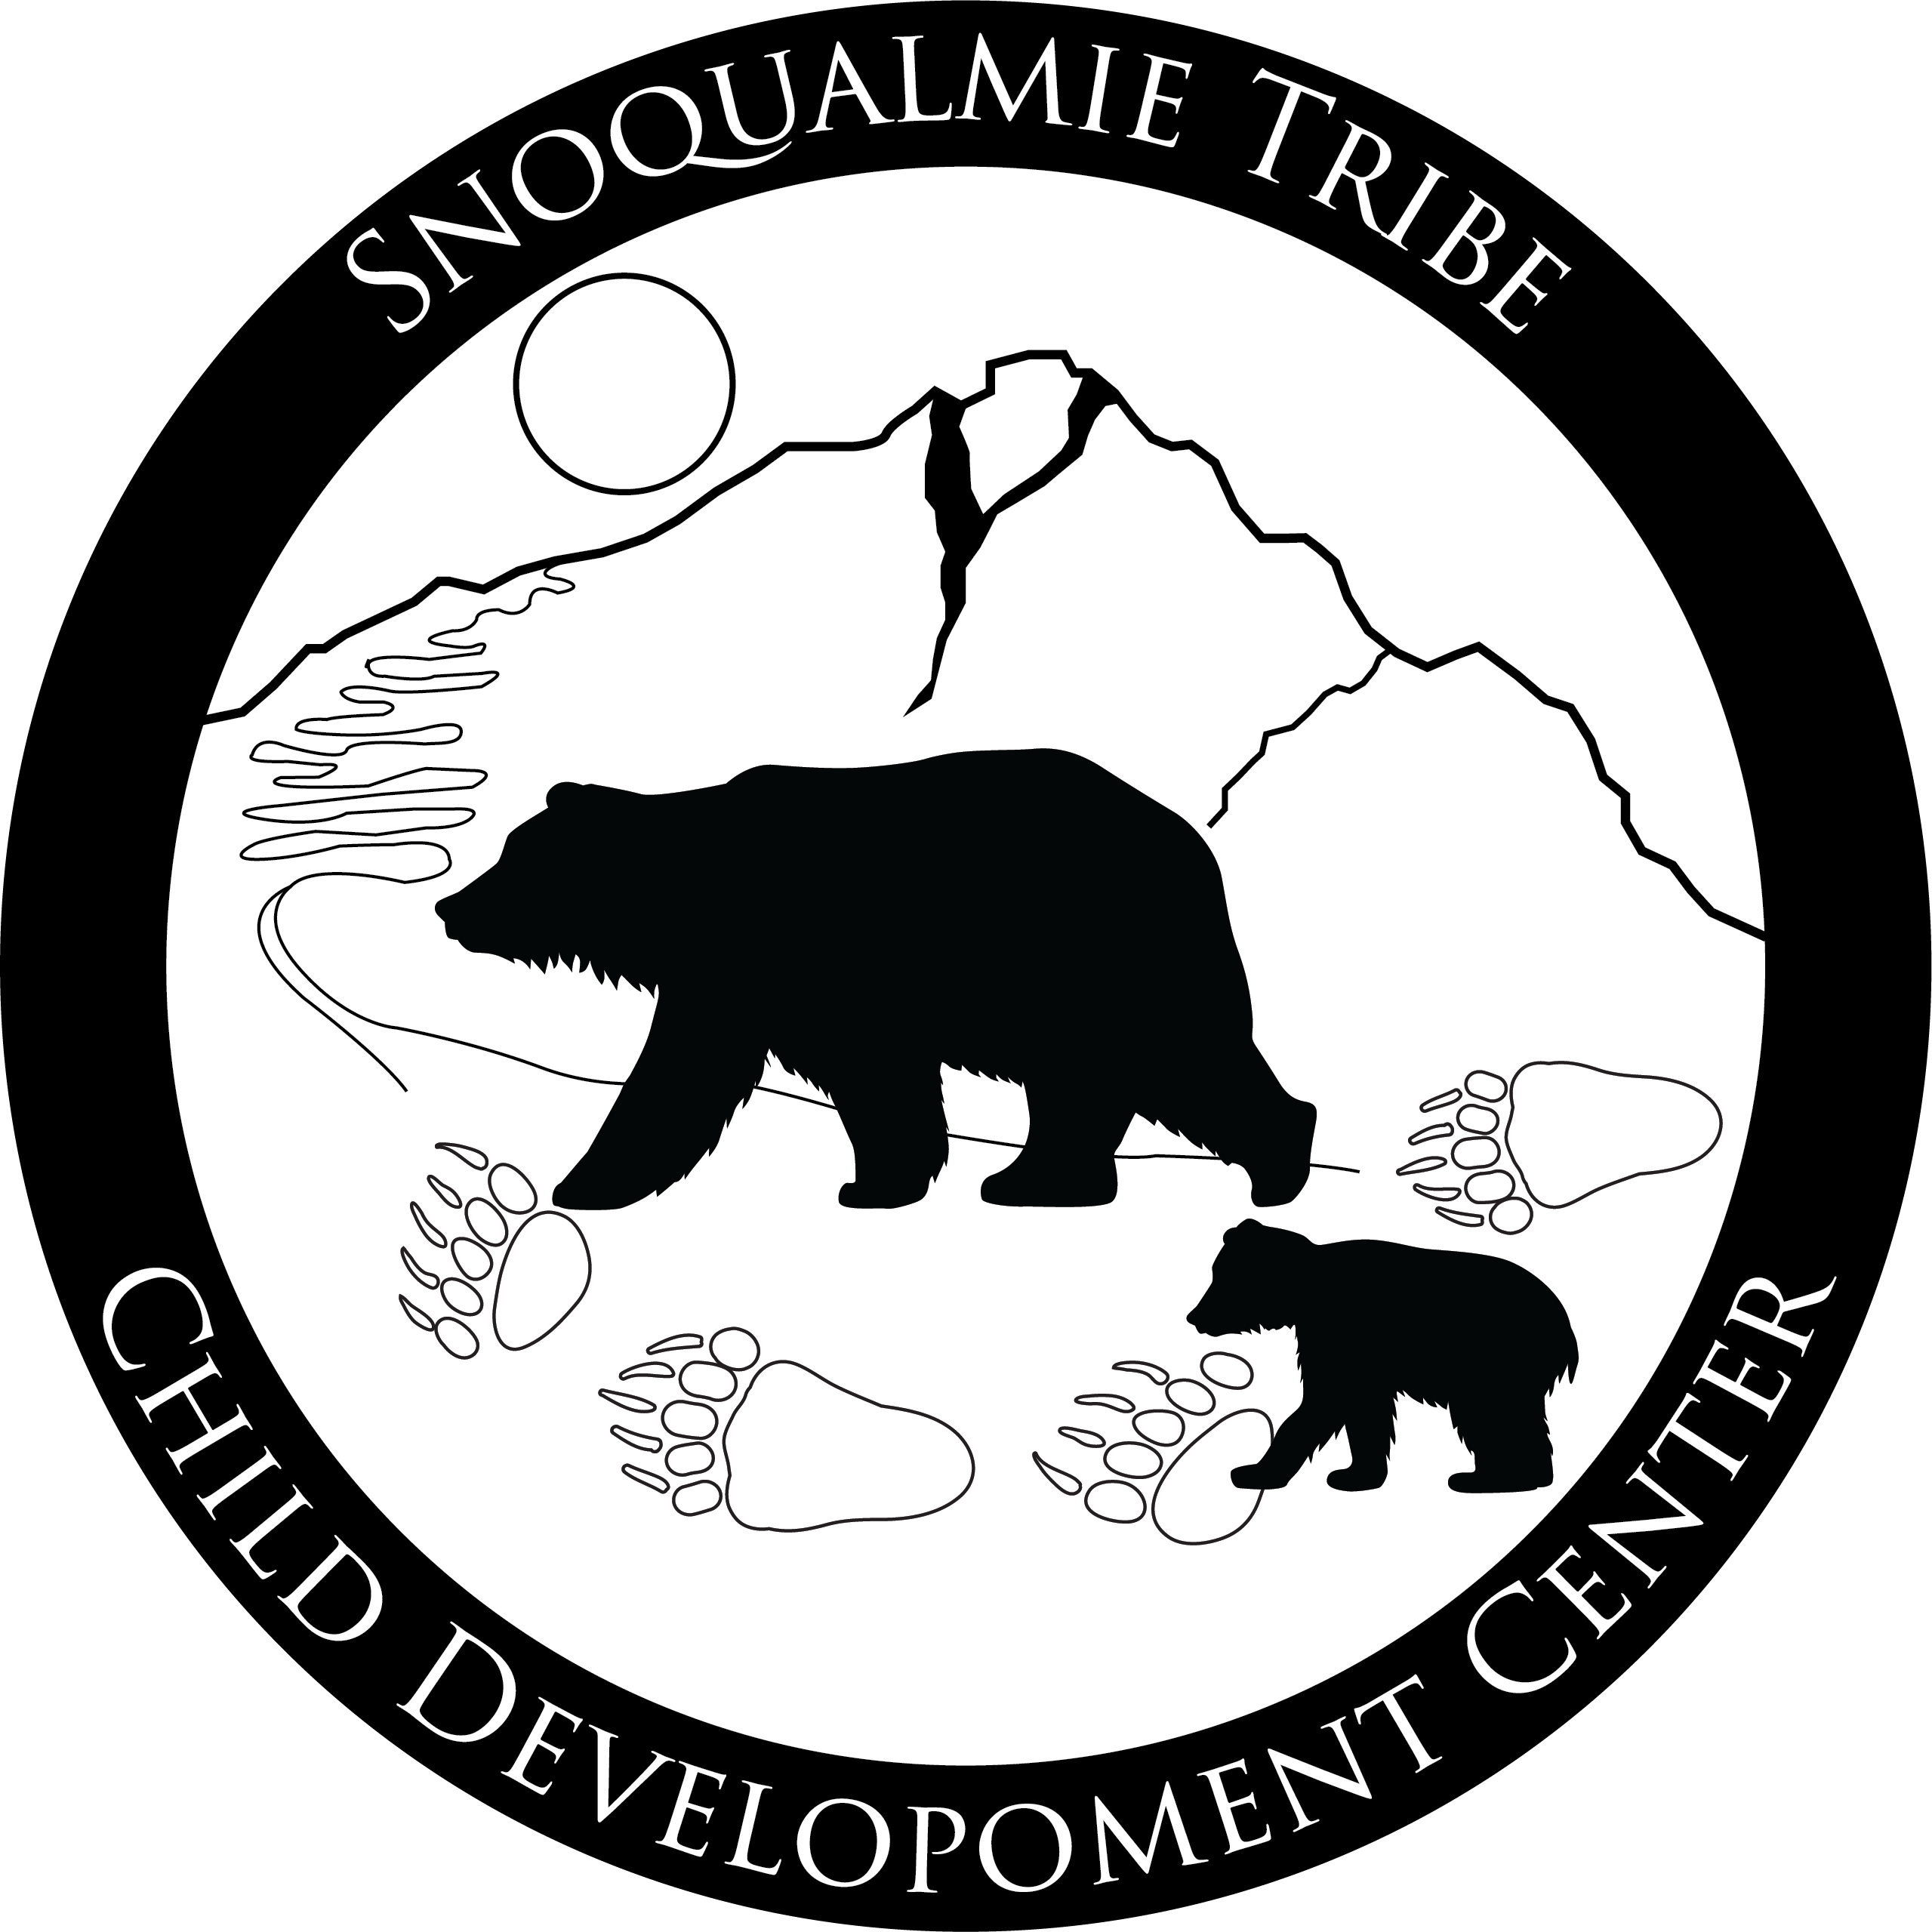 Snoqualmie Tribe Child Development Center